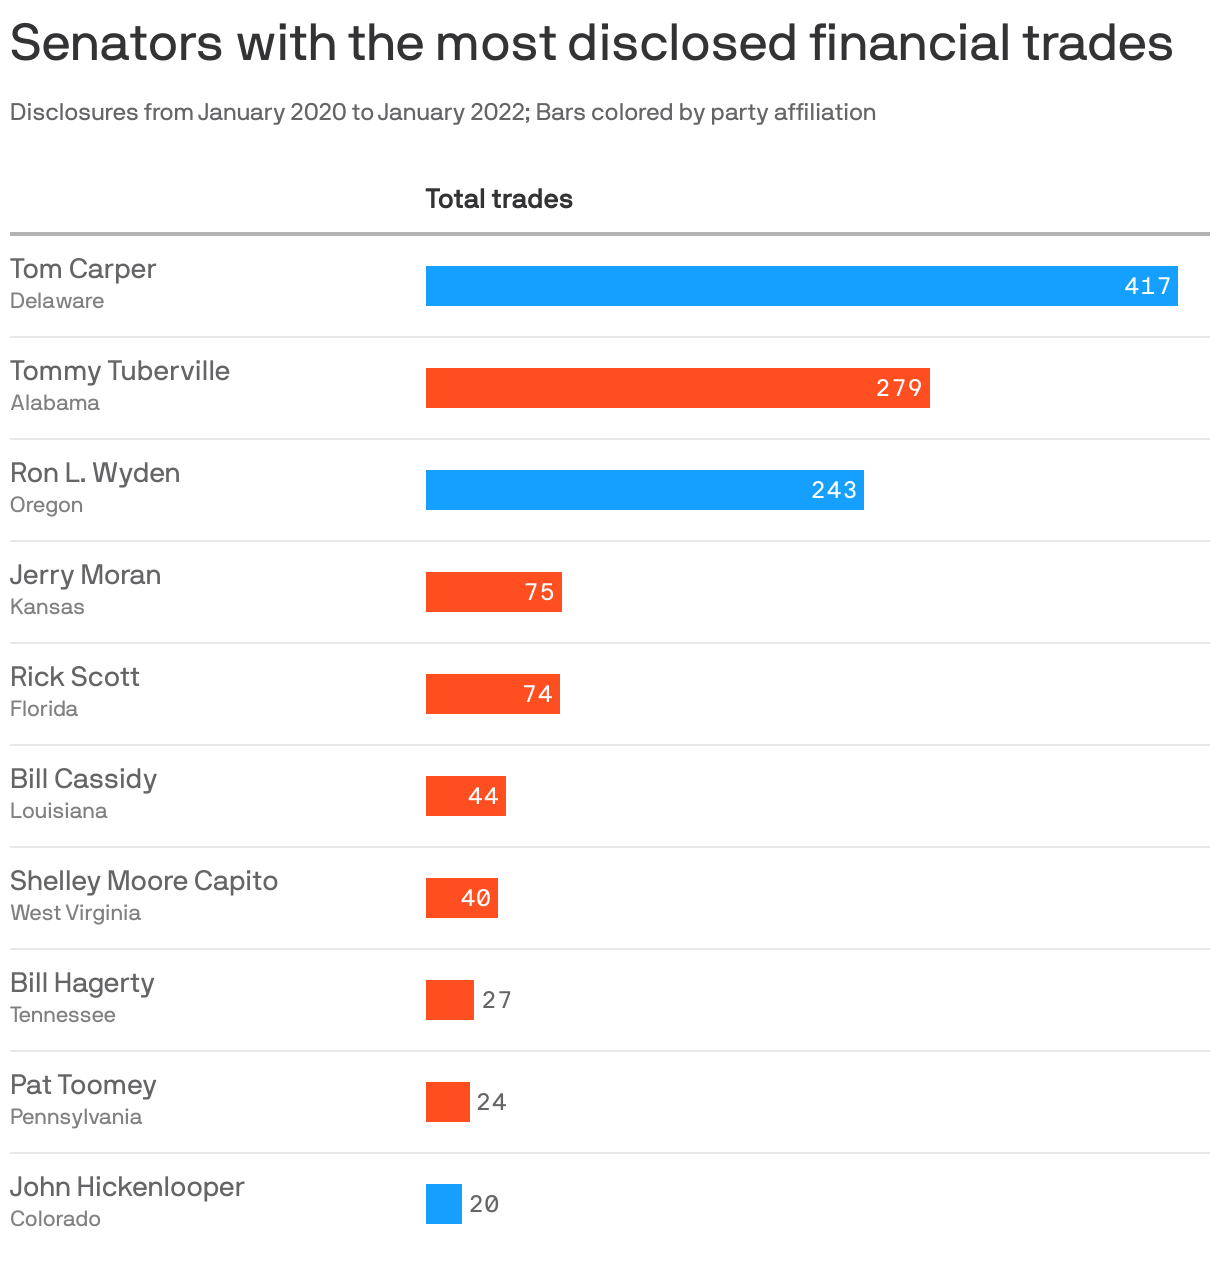 Senators with the most financial trades